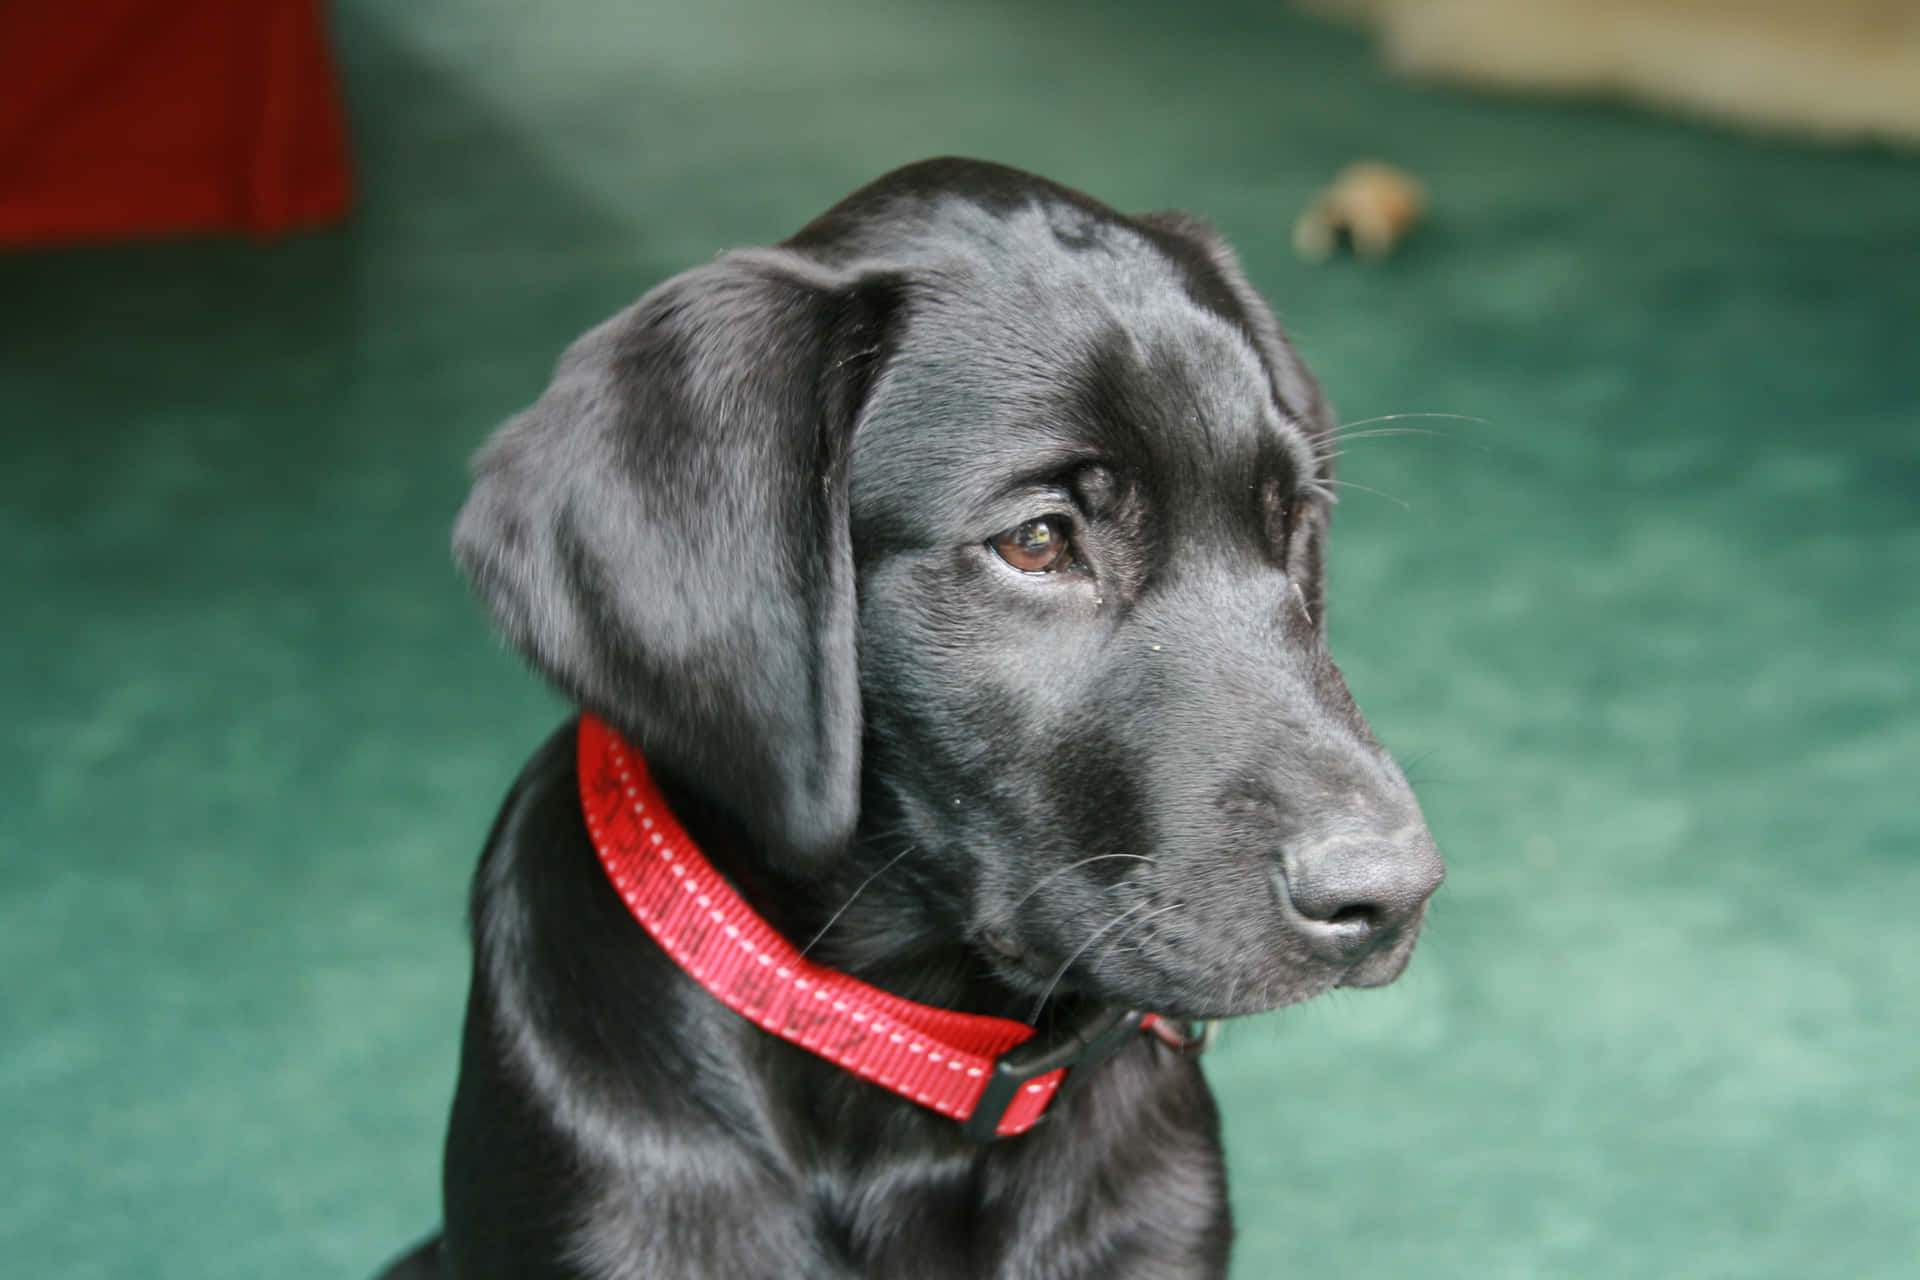 Imagende Un Cachorro De Labrador Con Collar Rojo.